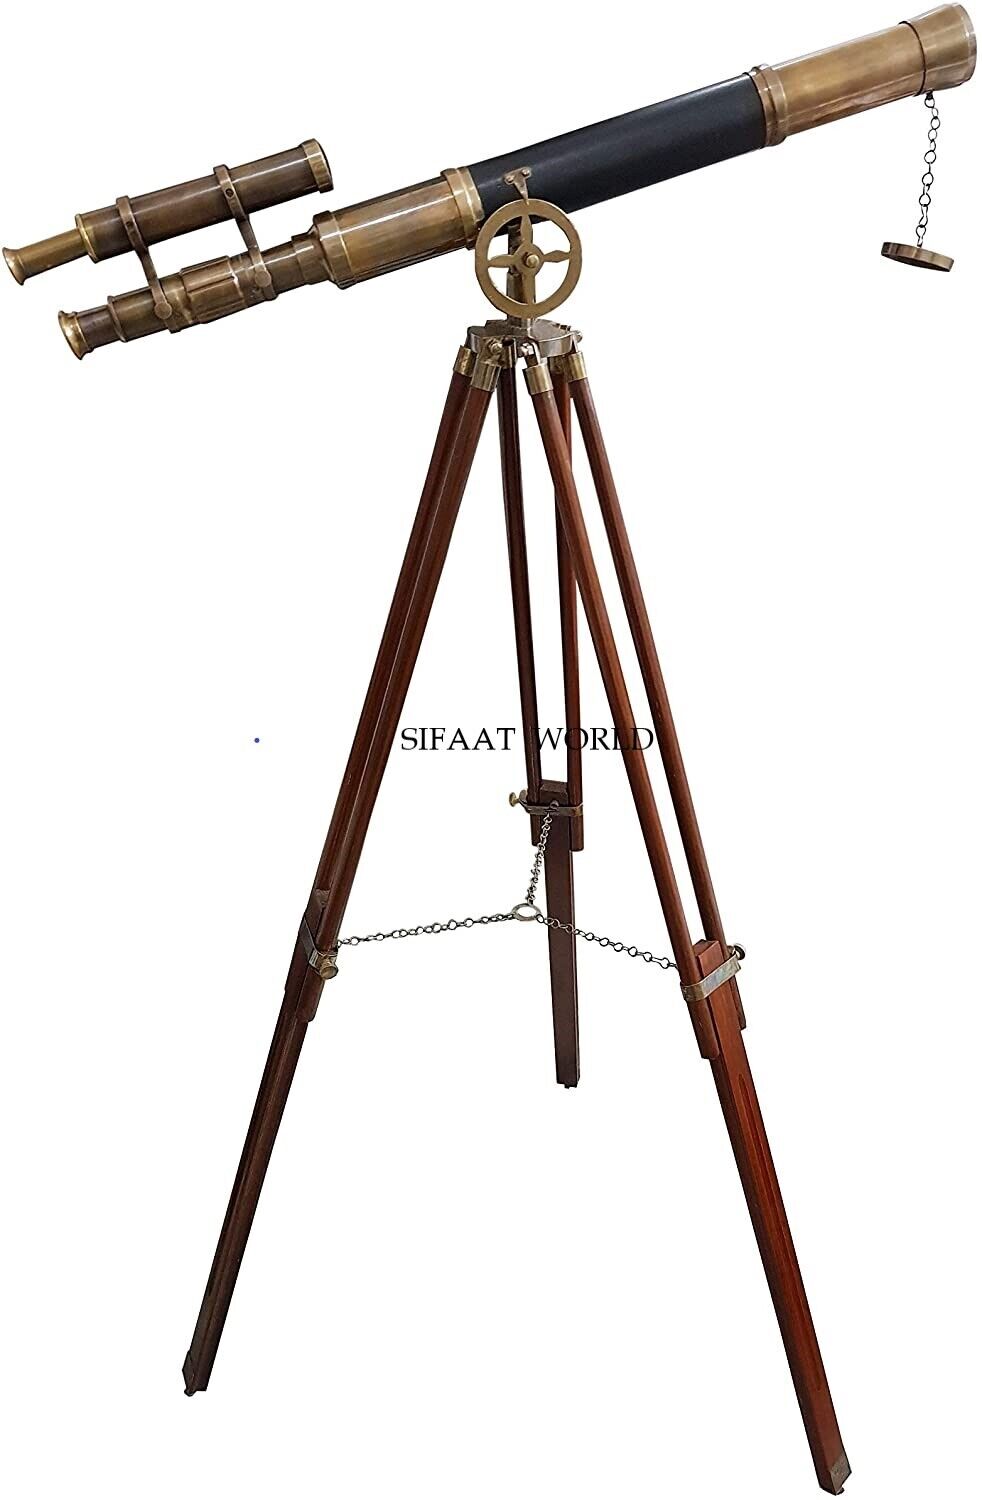 Maritime Antique Brass Double Barrel Telescope with Floor Standing Tripod, Decor